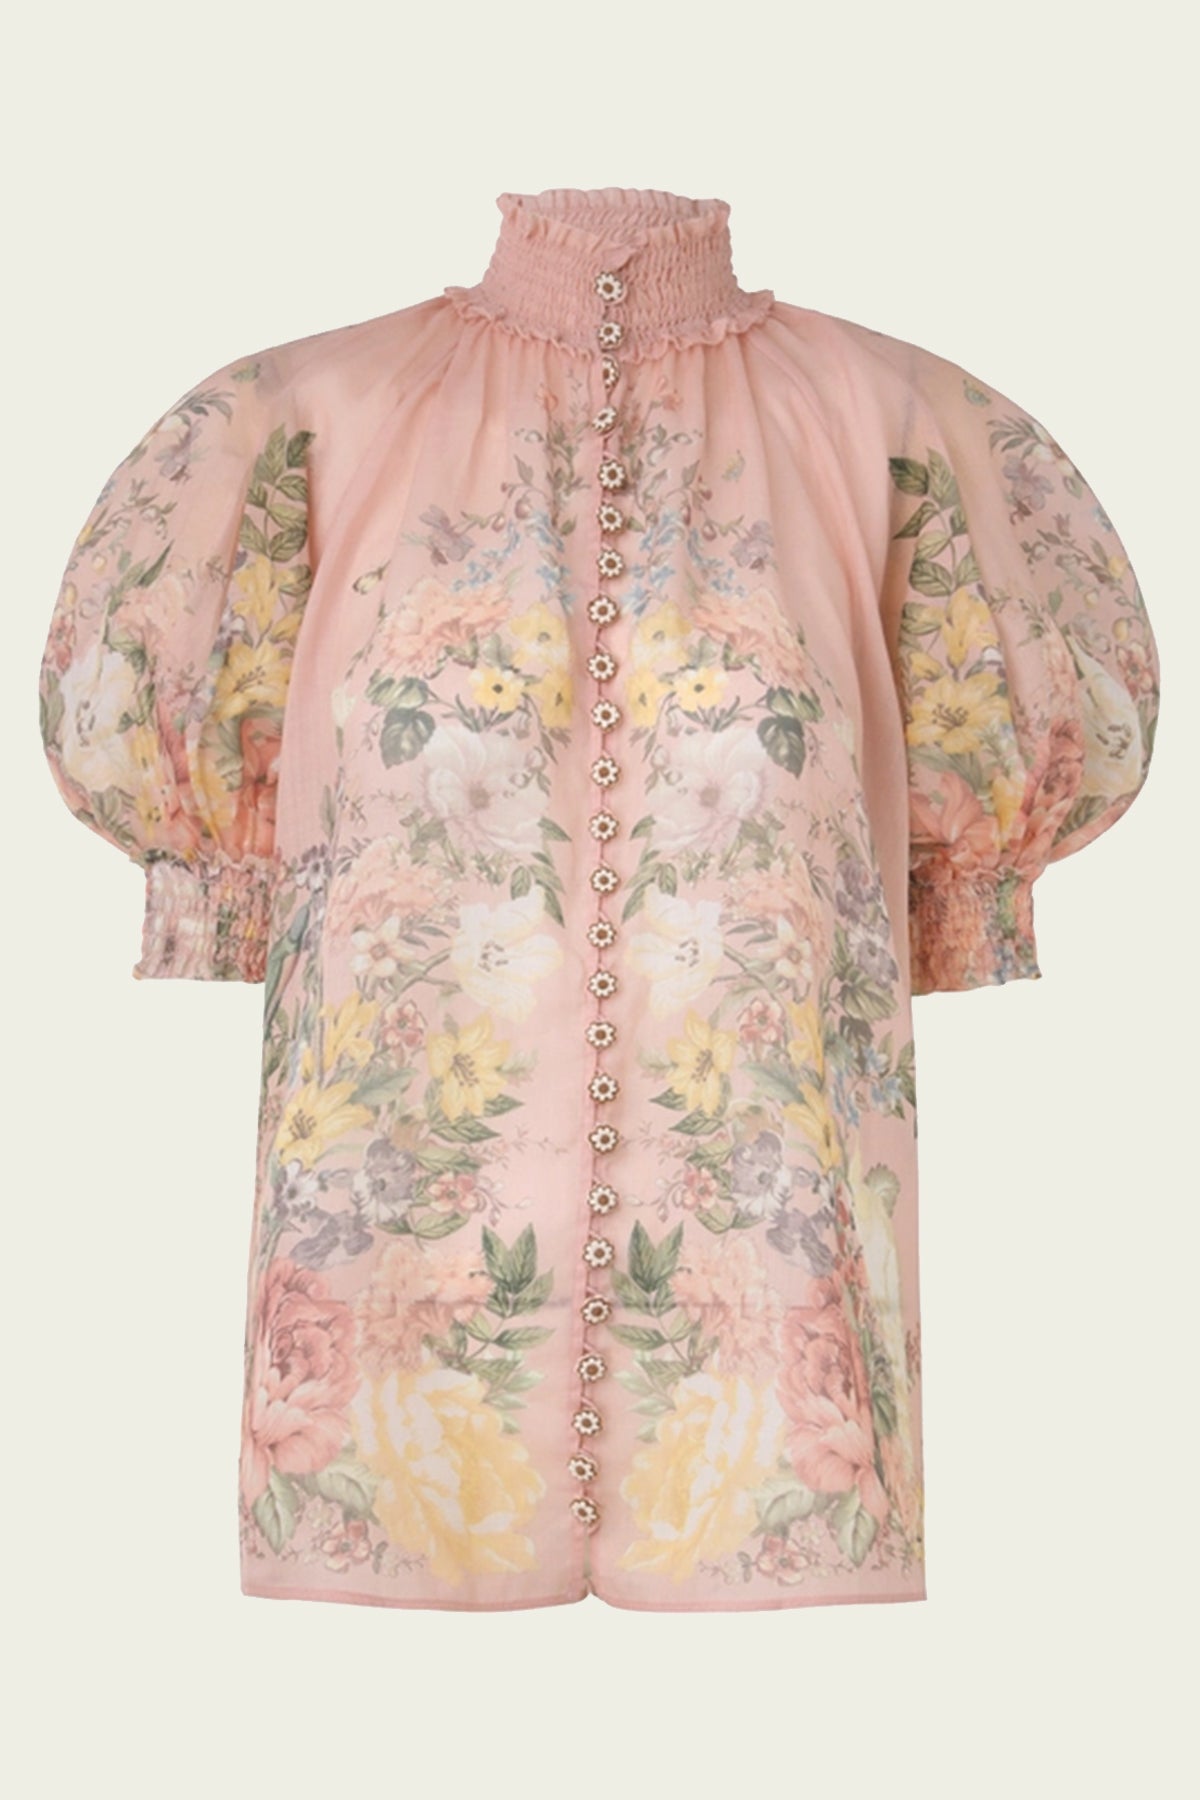 Waverly Short Sleeve Blouse in Pink Floral - shop - olivia.com